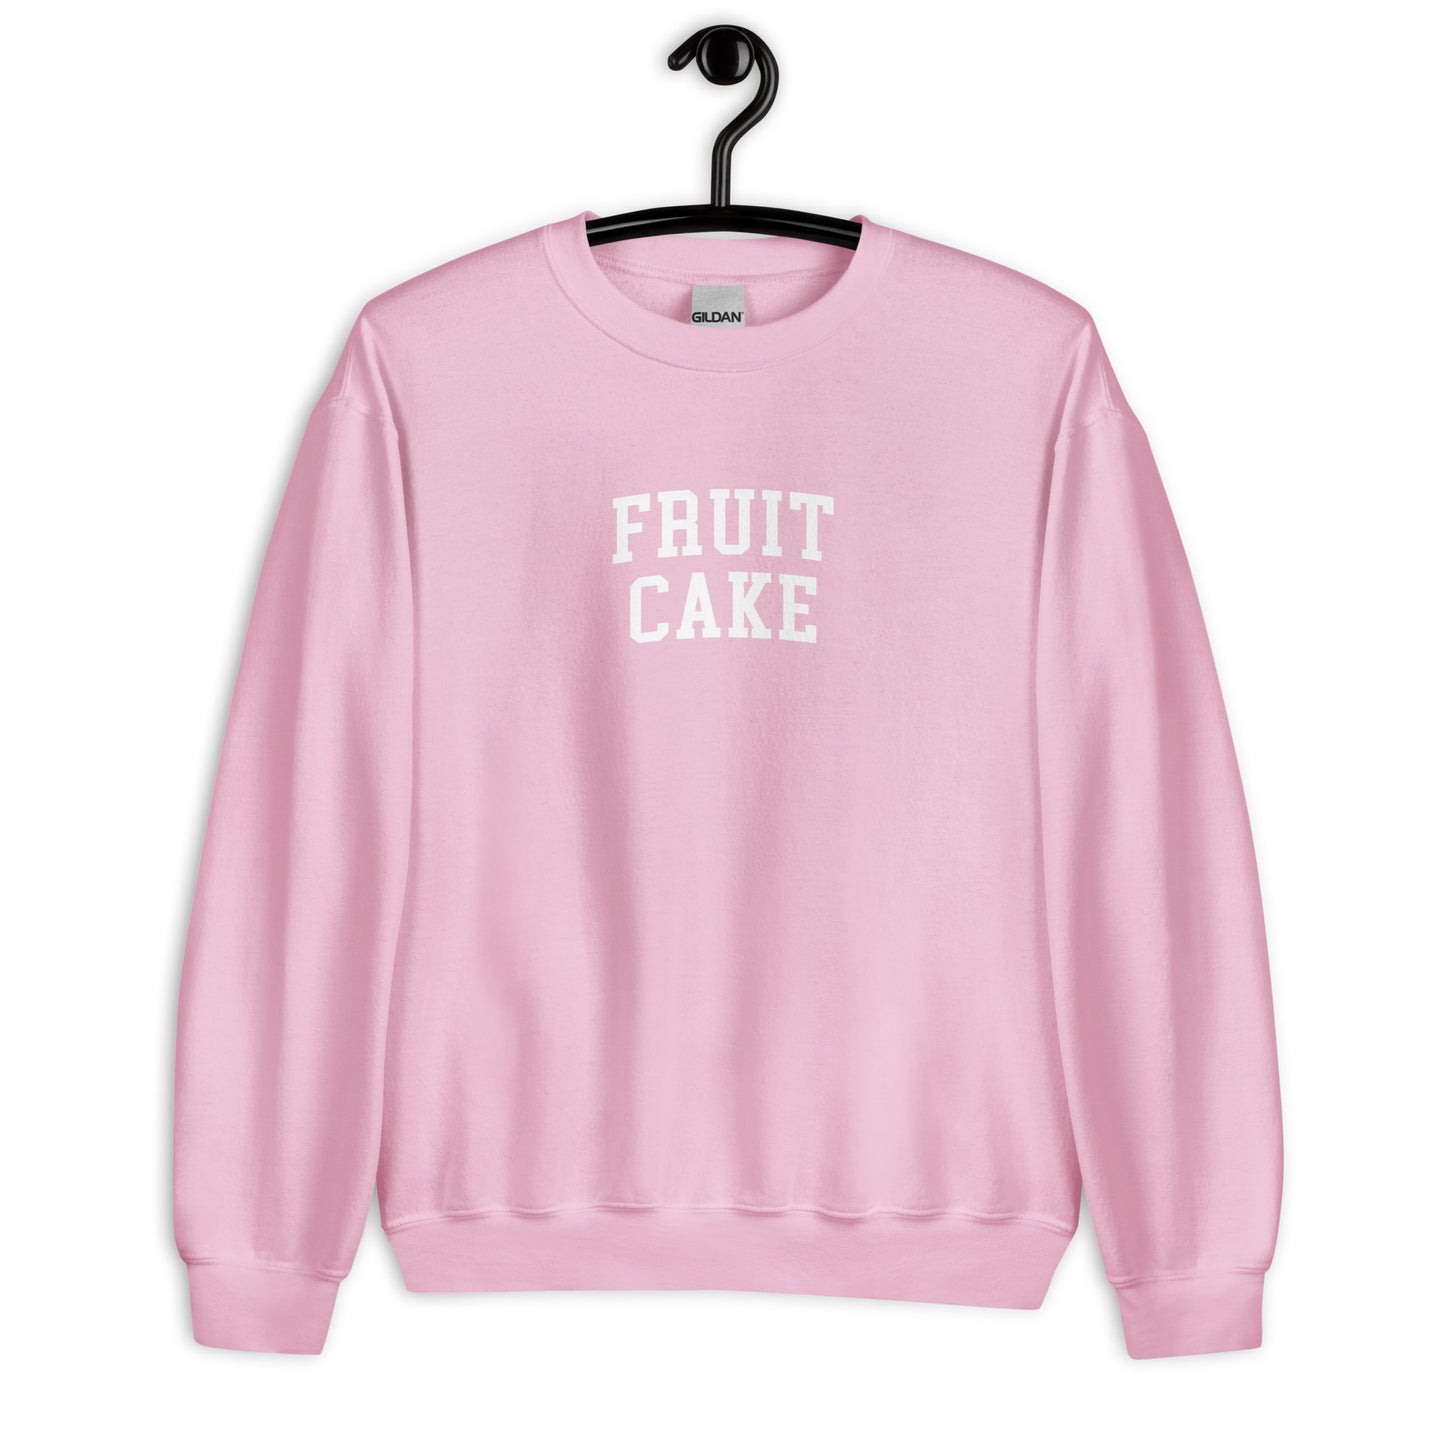 Fruit Cake Sweatshirt - Arched Font